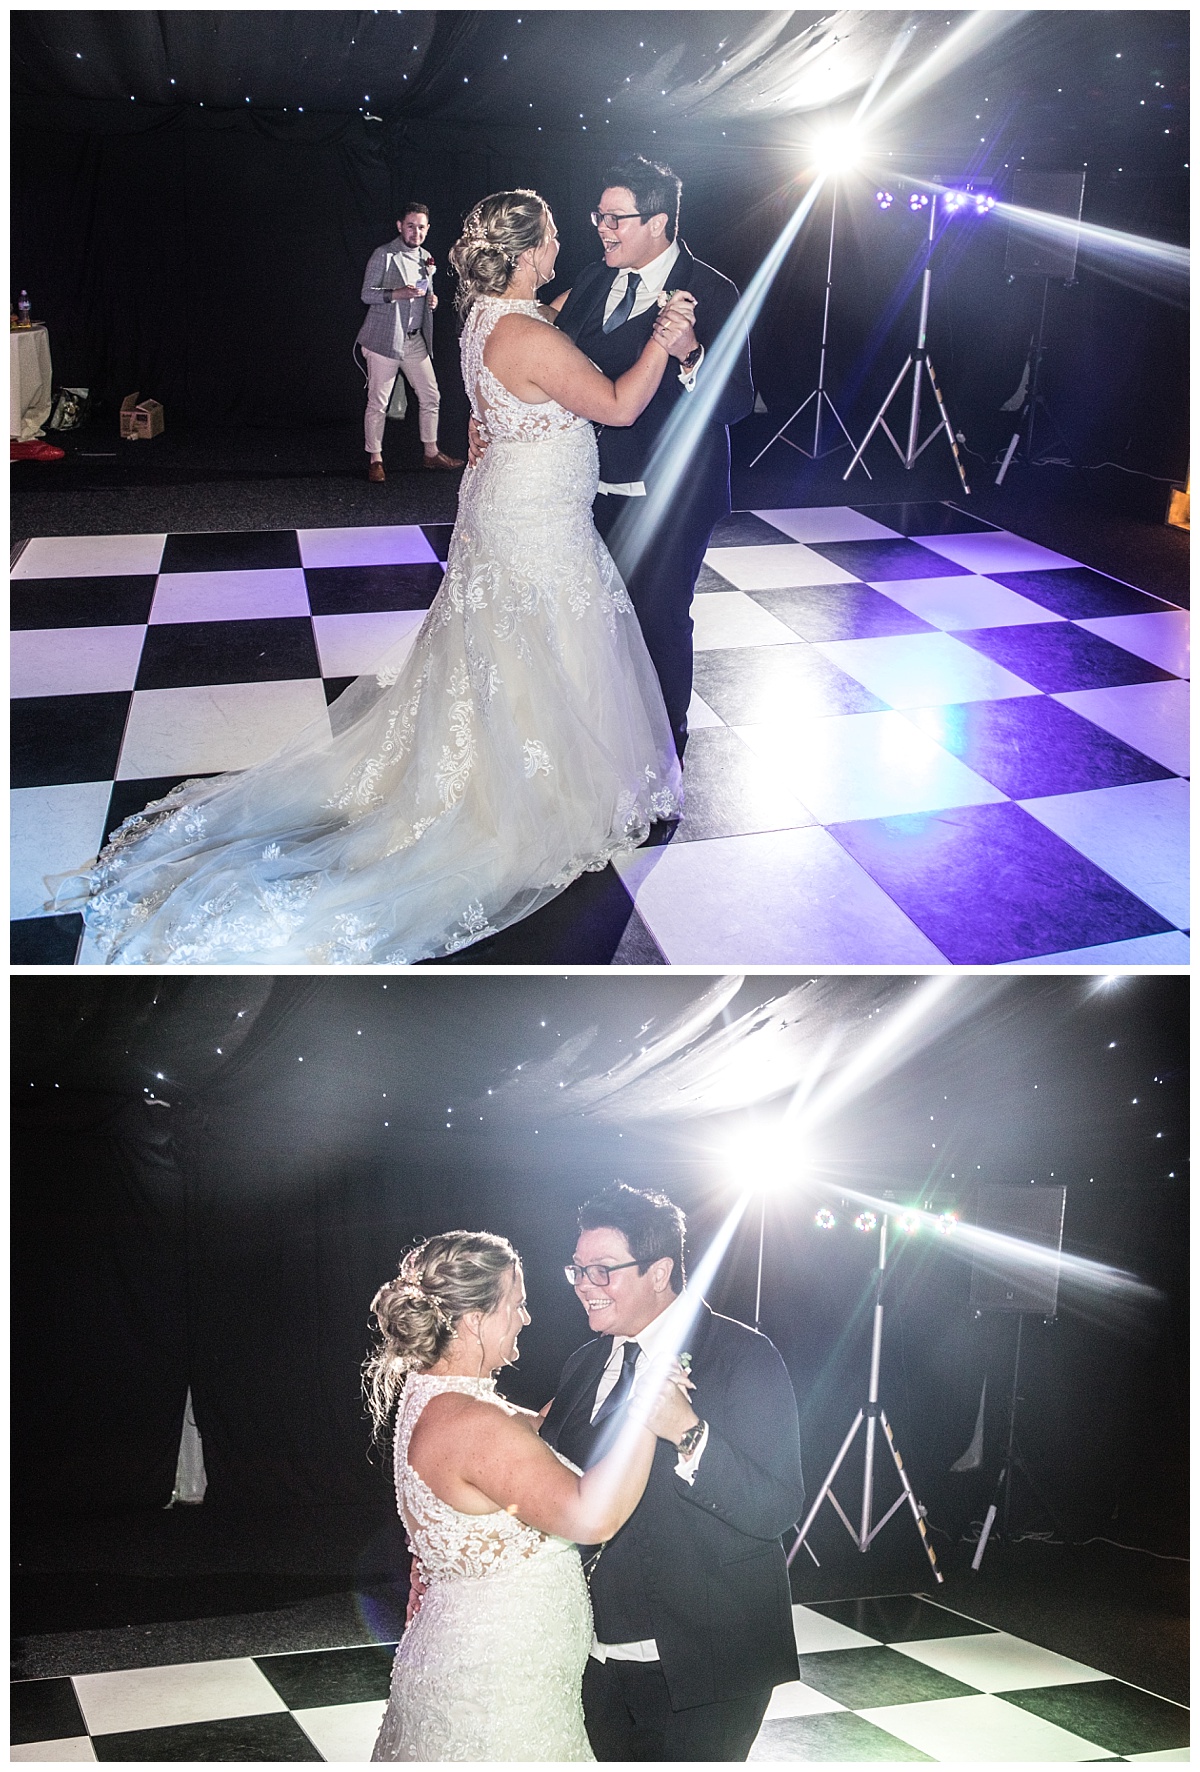 Wedding Photography Manchester - Nicky and Nichola's Nunsmere Hall Wedding Day 106